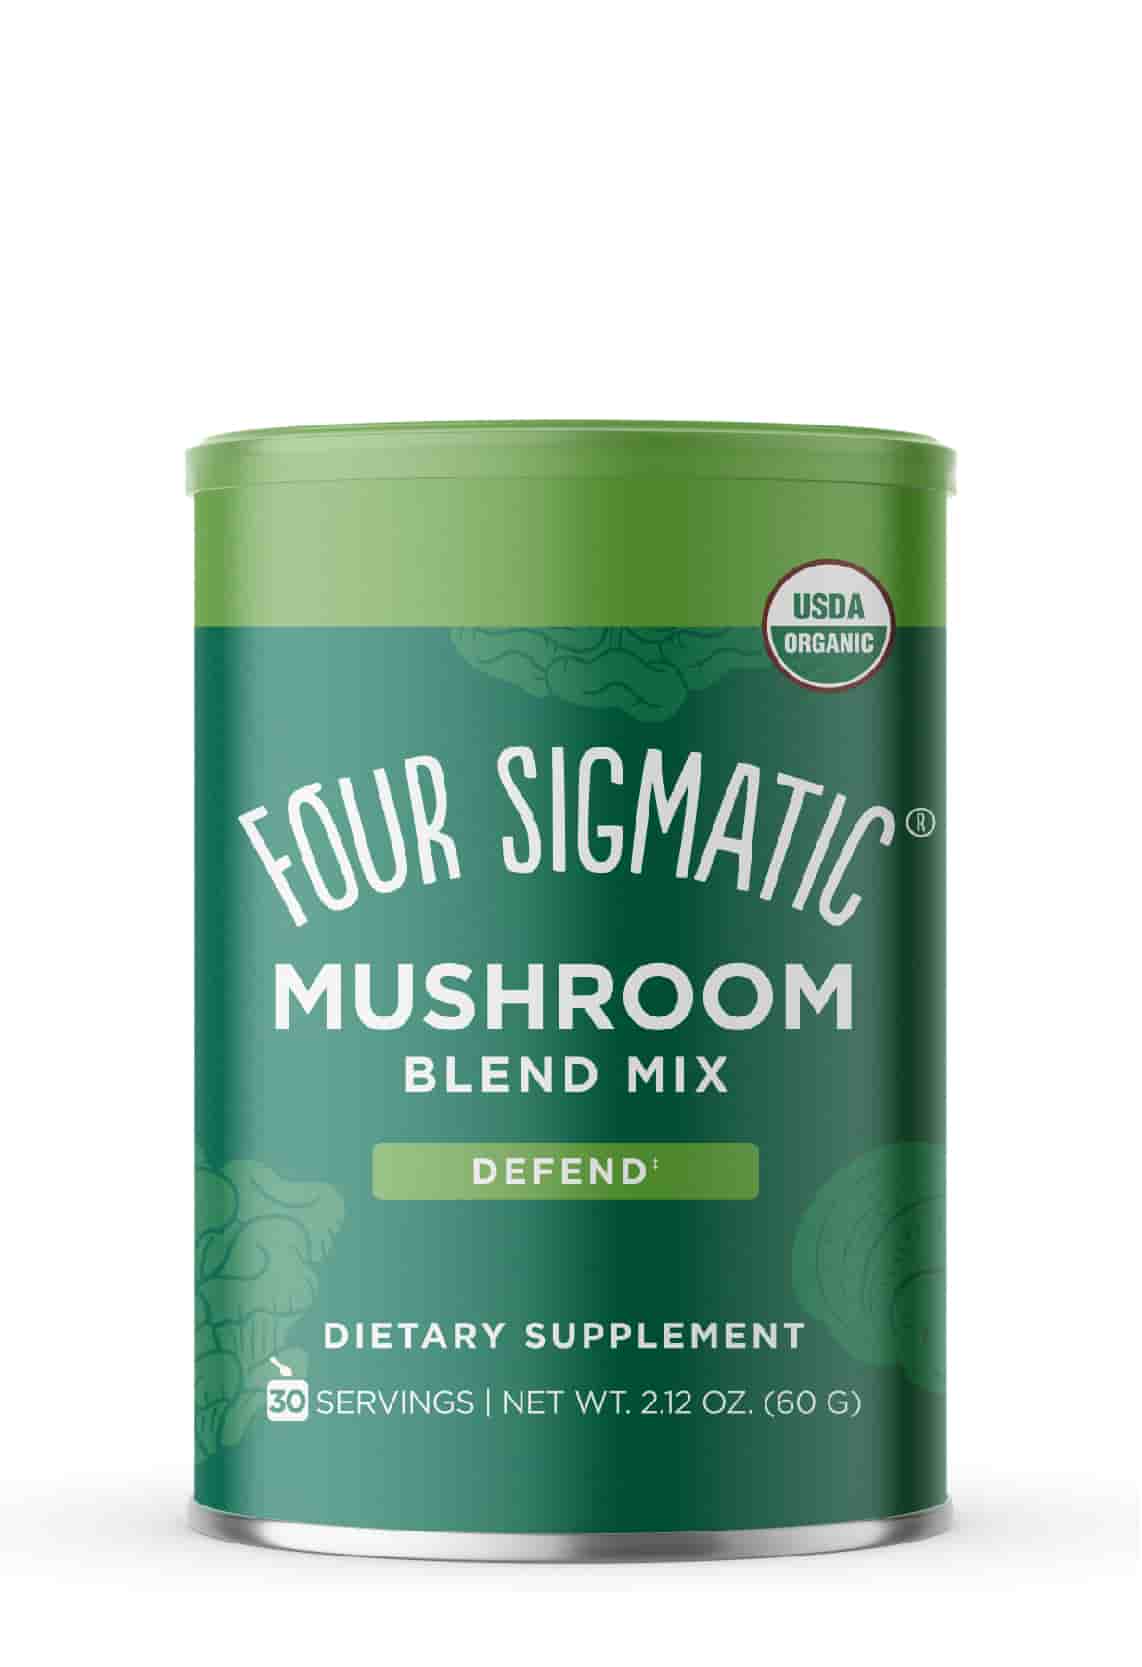 Buy Four Sigmatic Mushroom Blend at LiveHelfi